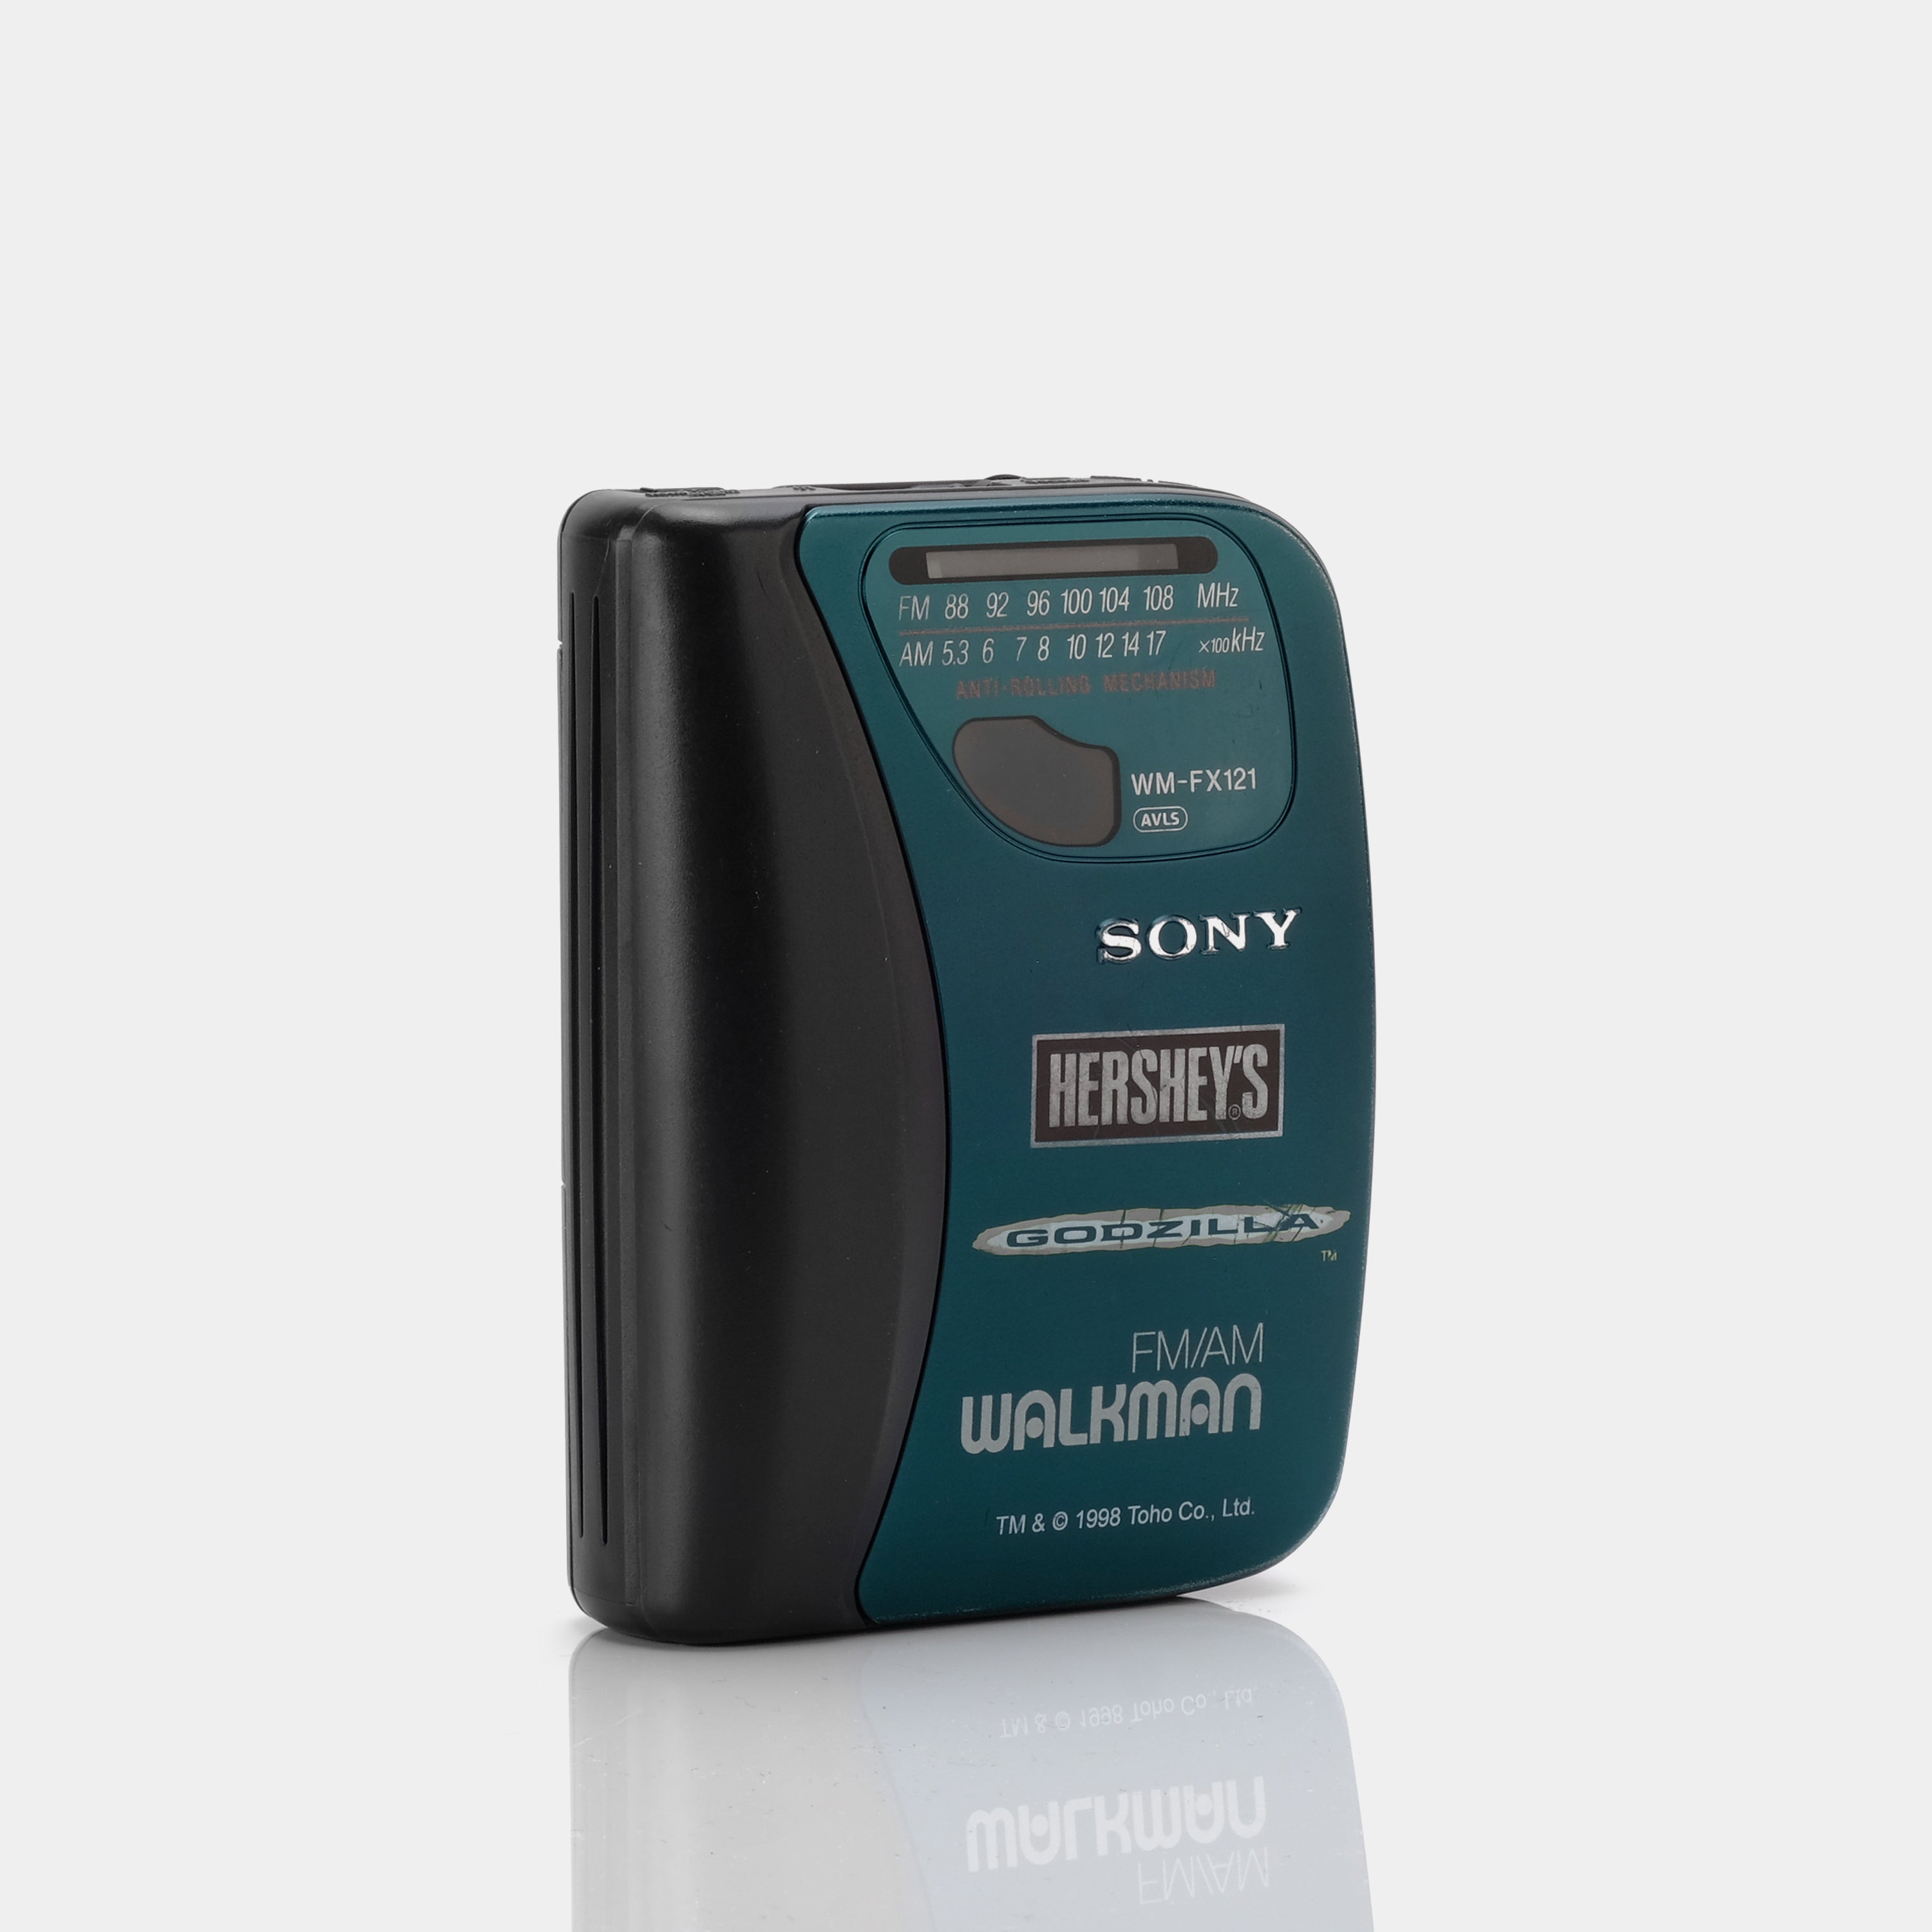 Sony WM-FX121 AM/FM HERSHEY'S x GODZILLA Green Portable Cassette Player